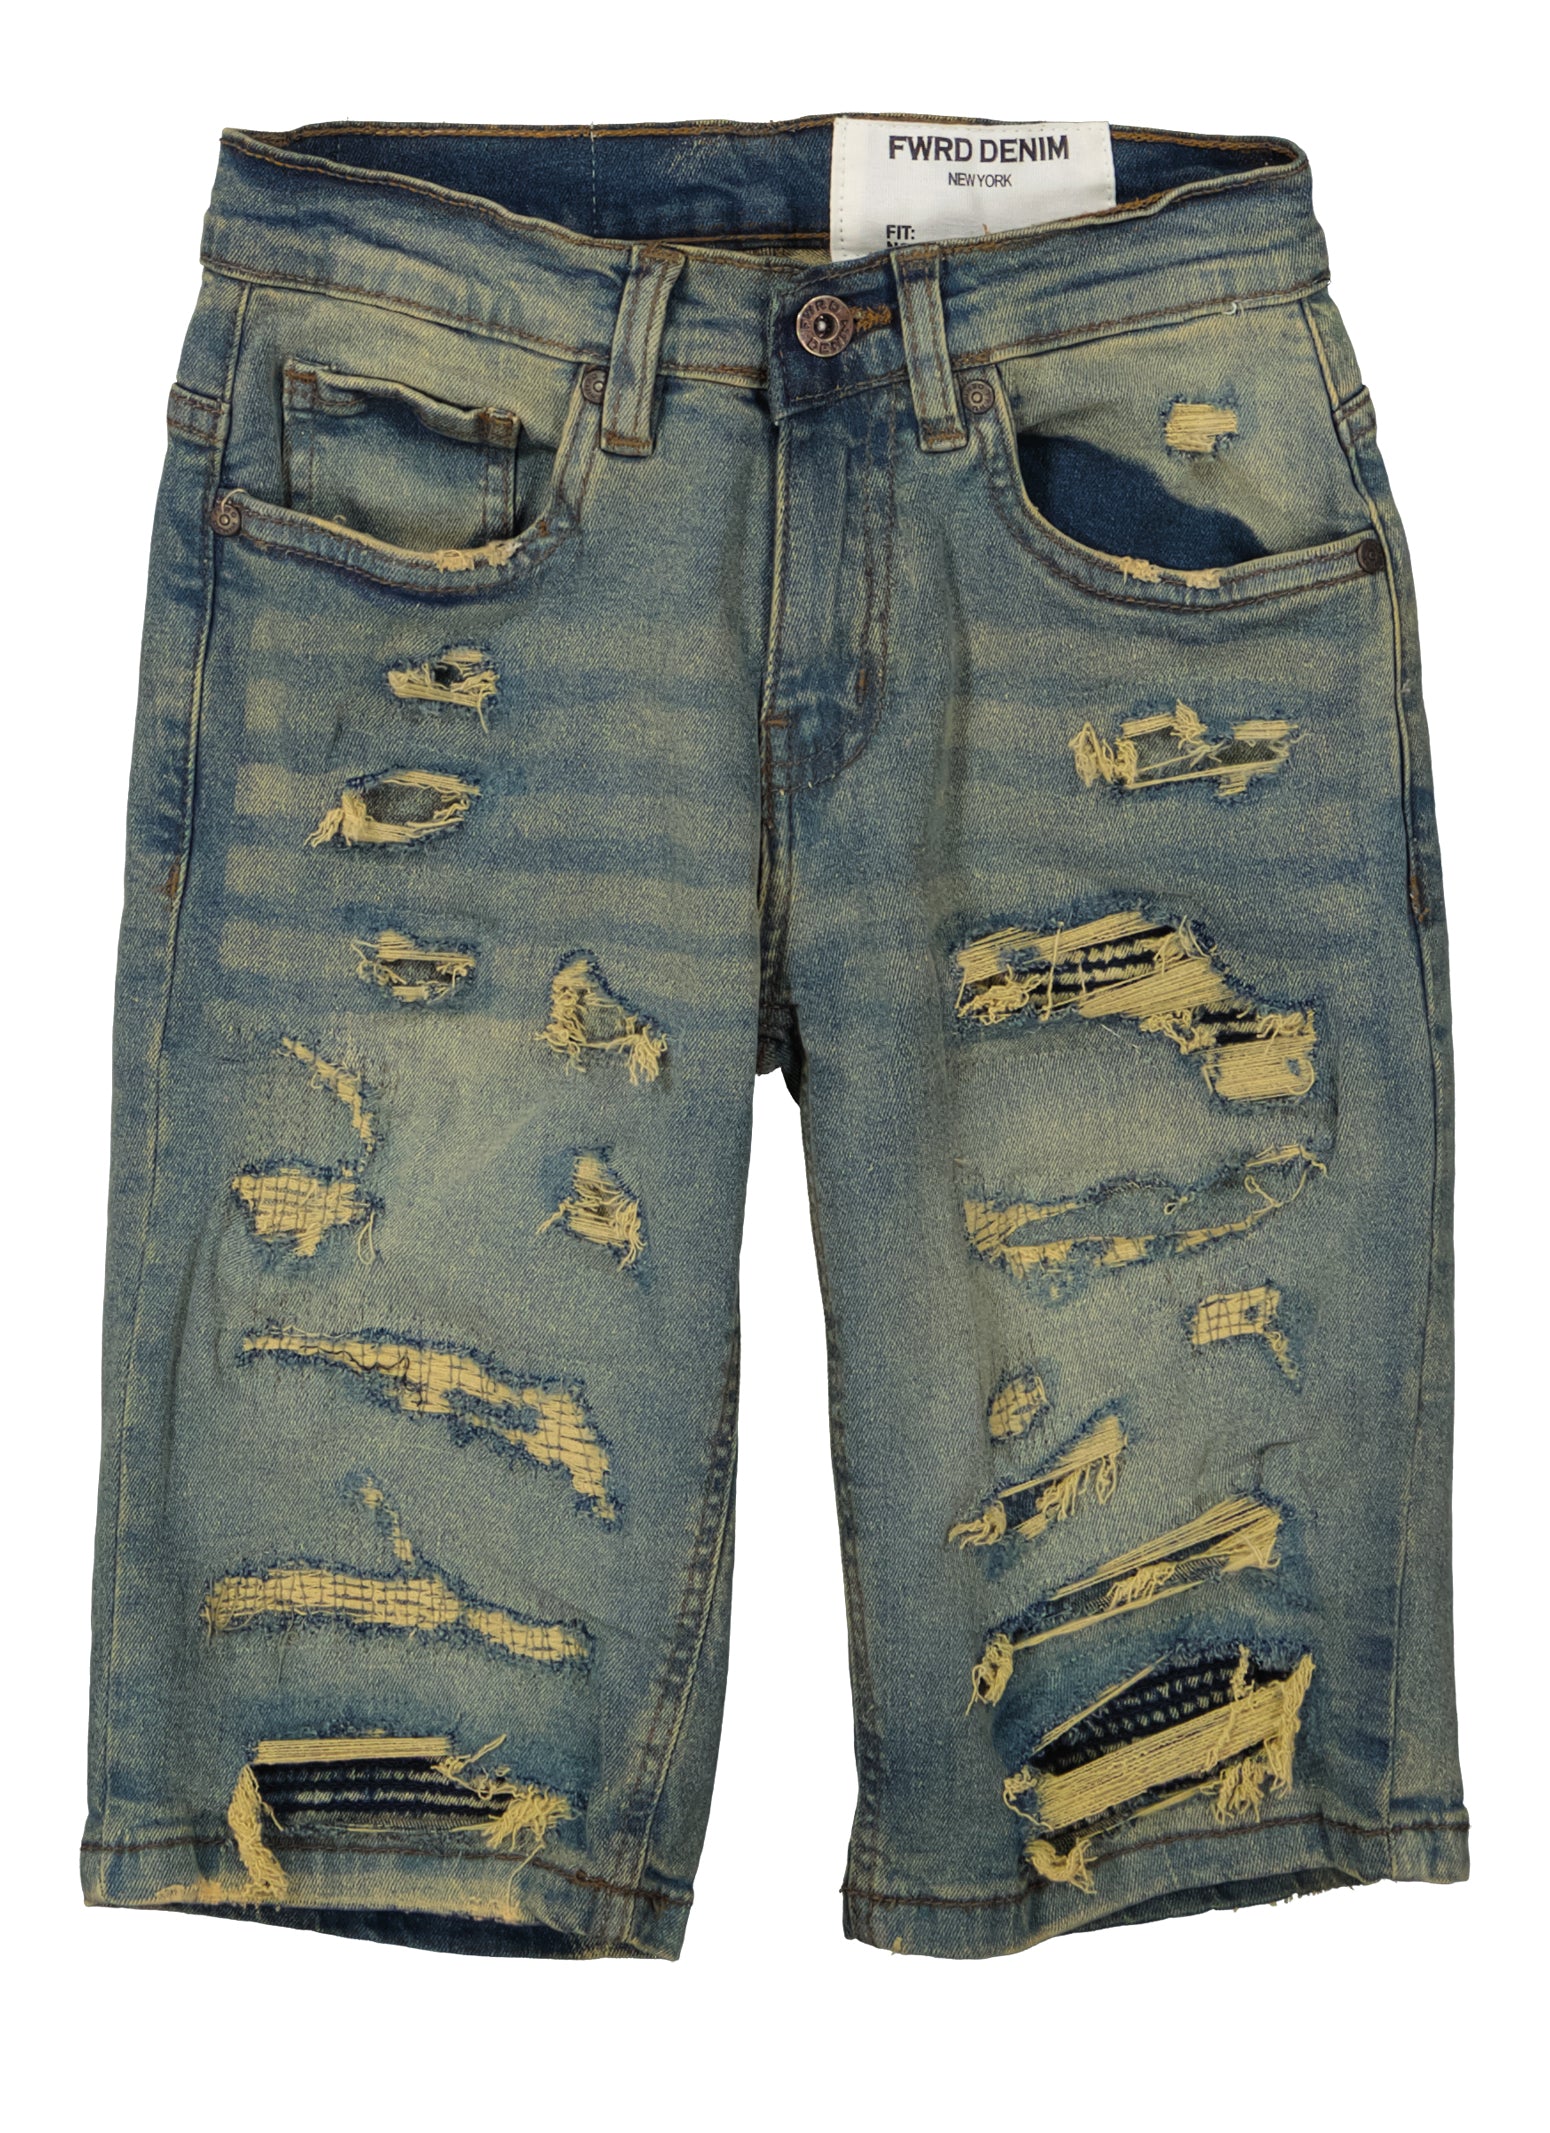 Boys Distressed Denim Shorts, Blue, Size 12